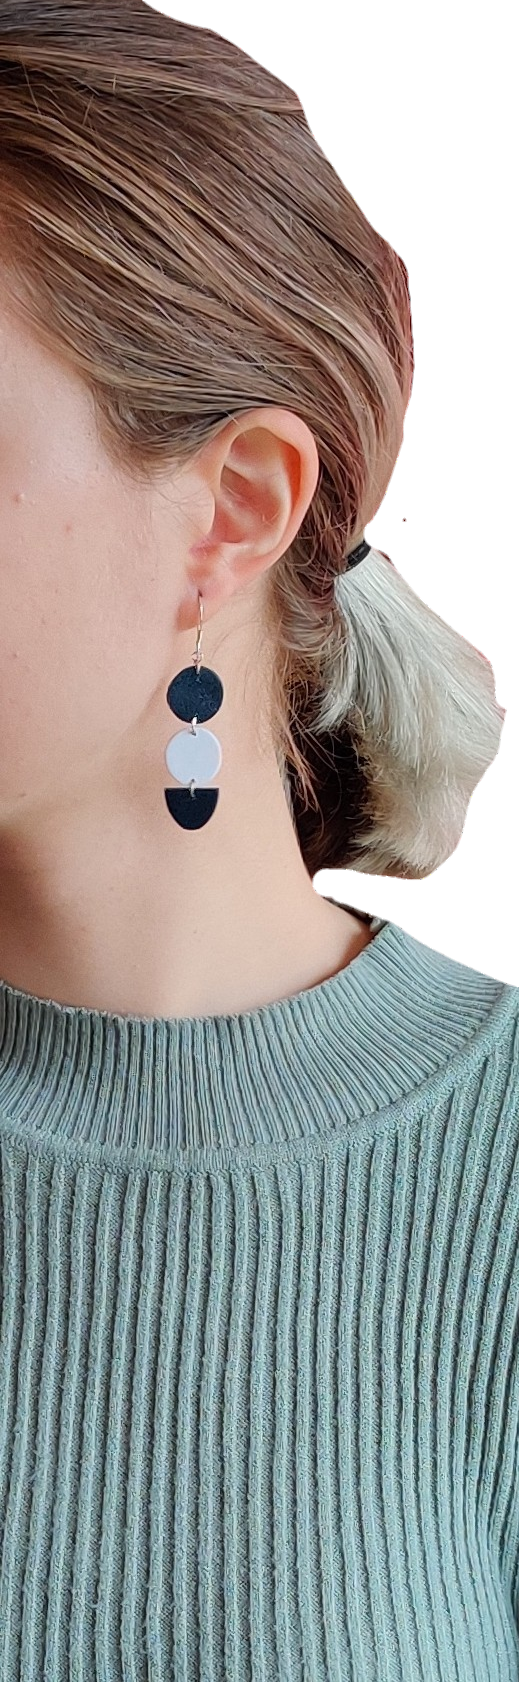 Dangle Earrings in Navy Blue & White Geometric Shapes